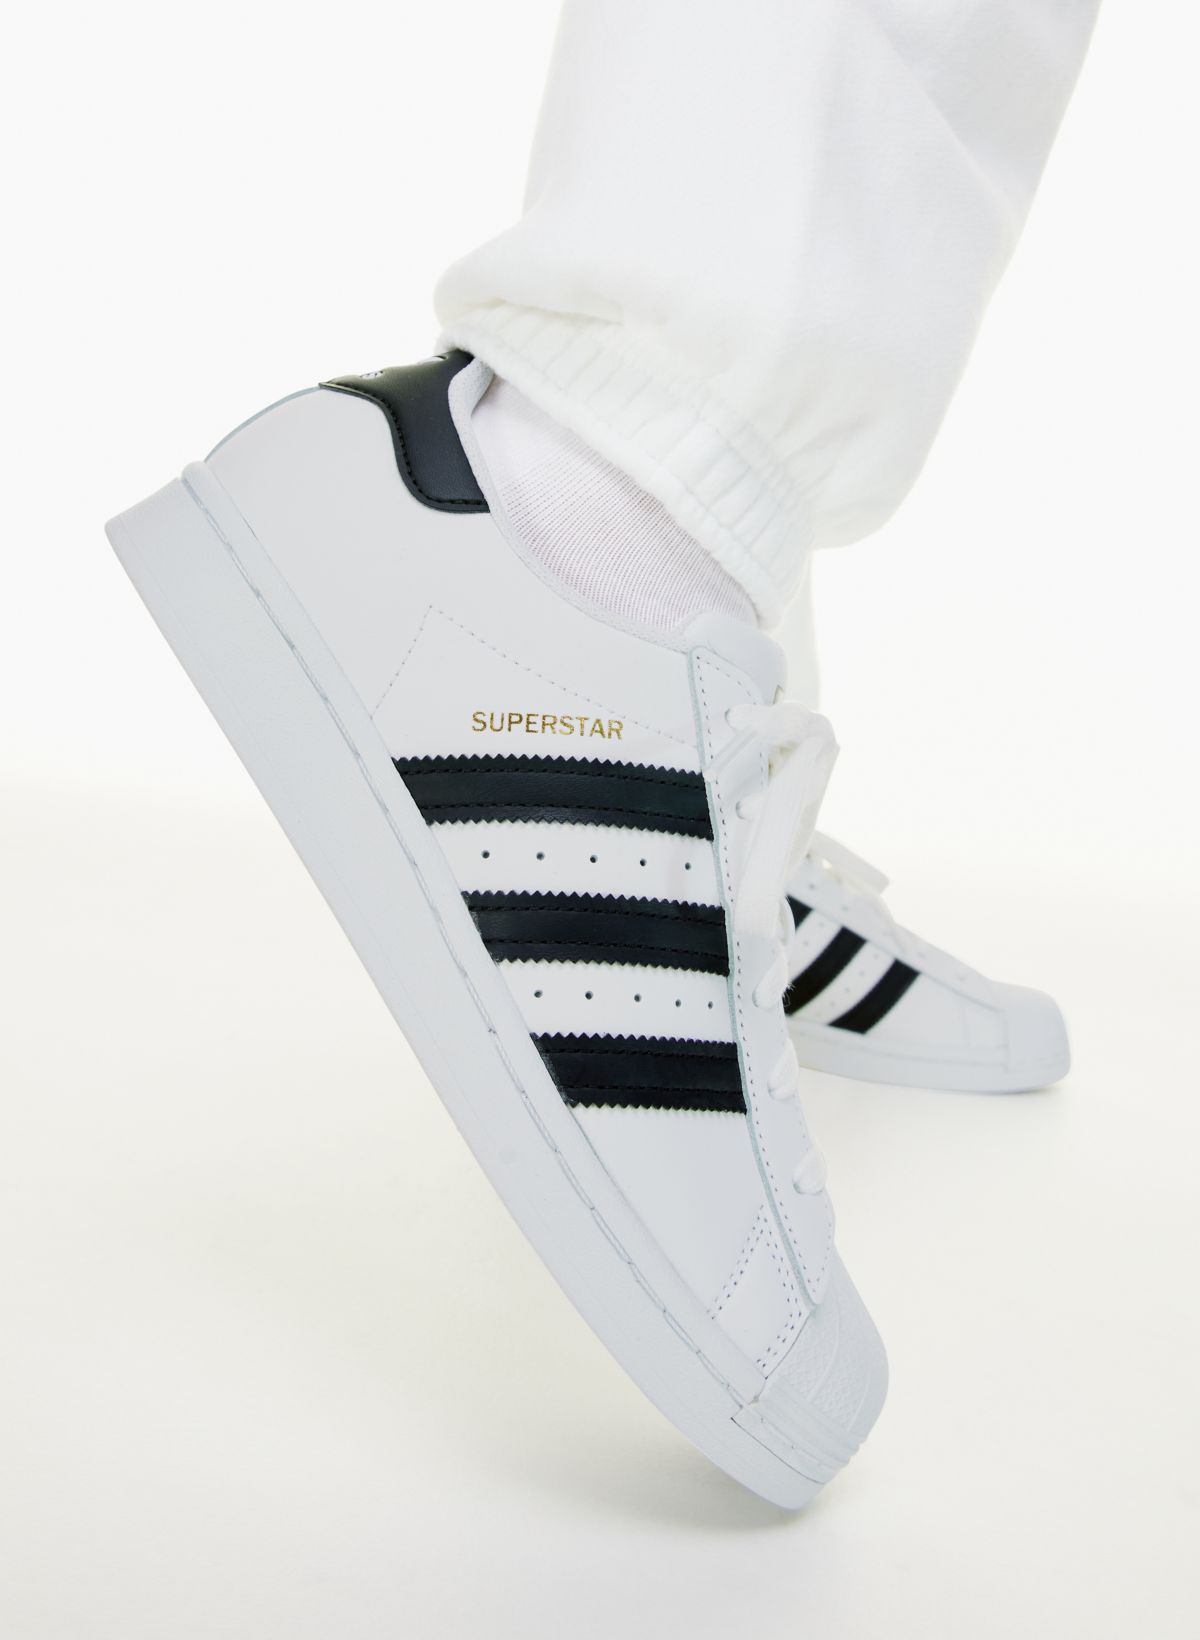  adidas Originals womens Superstar Sneaker, White/Black/White,  10.5 US